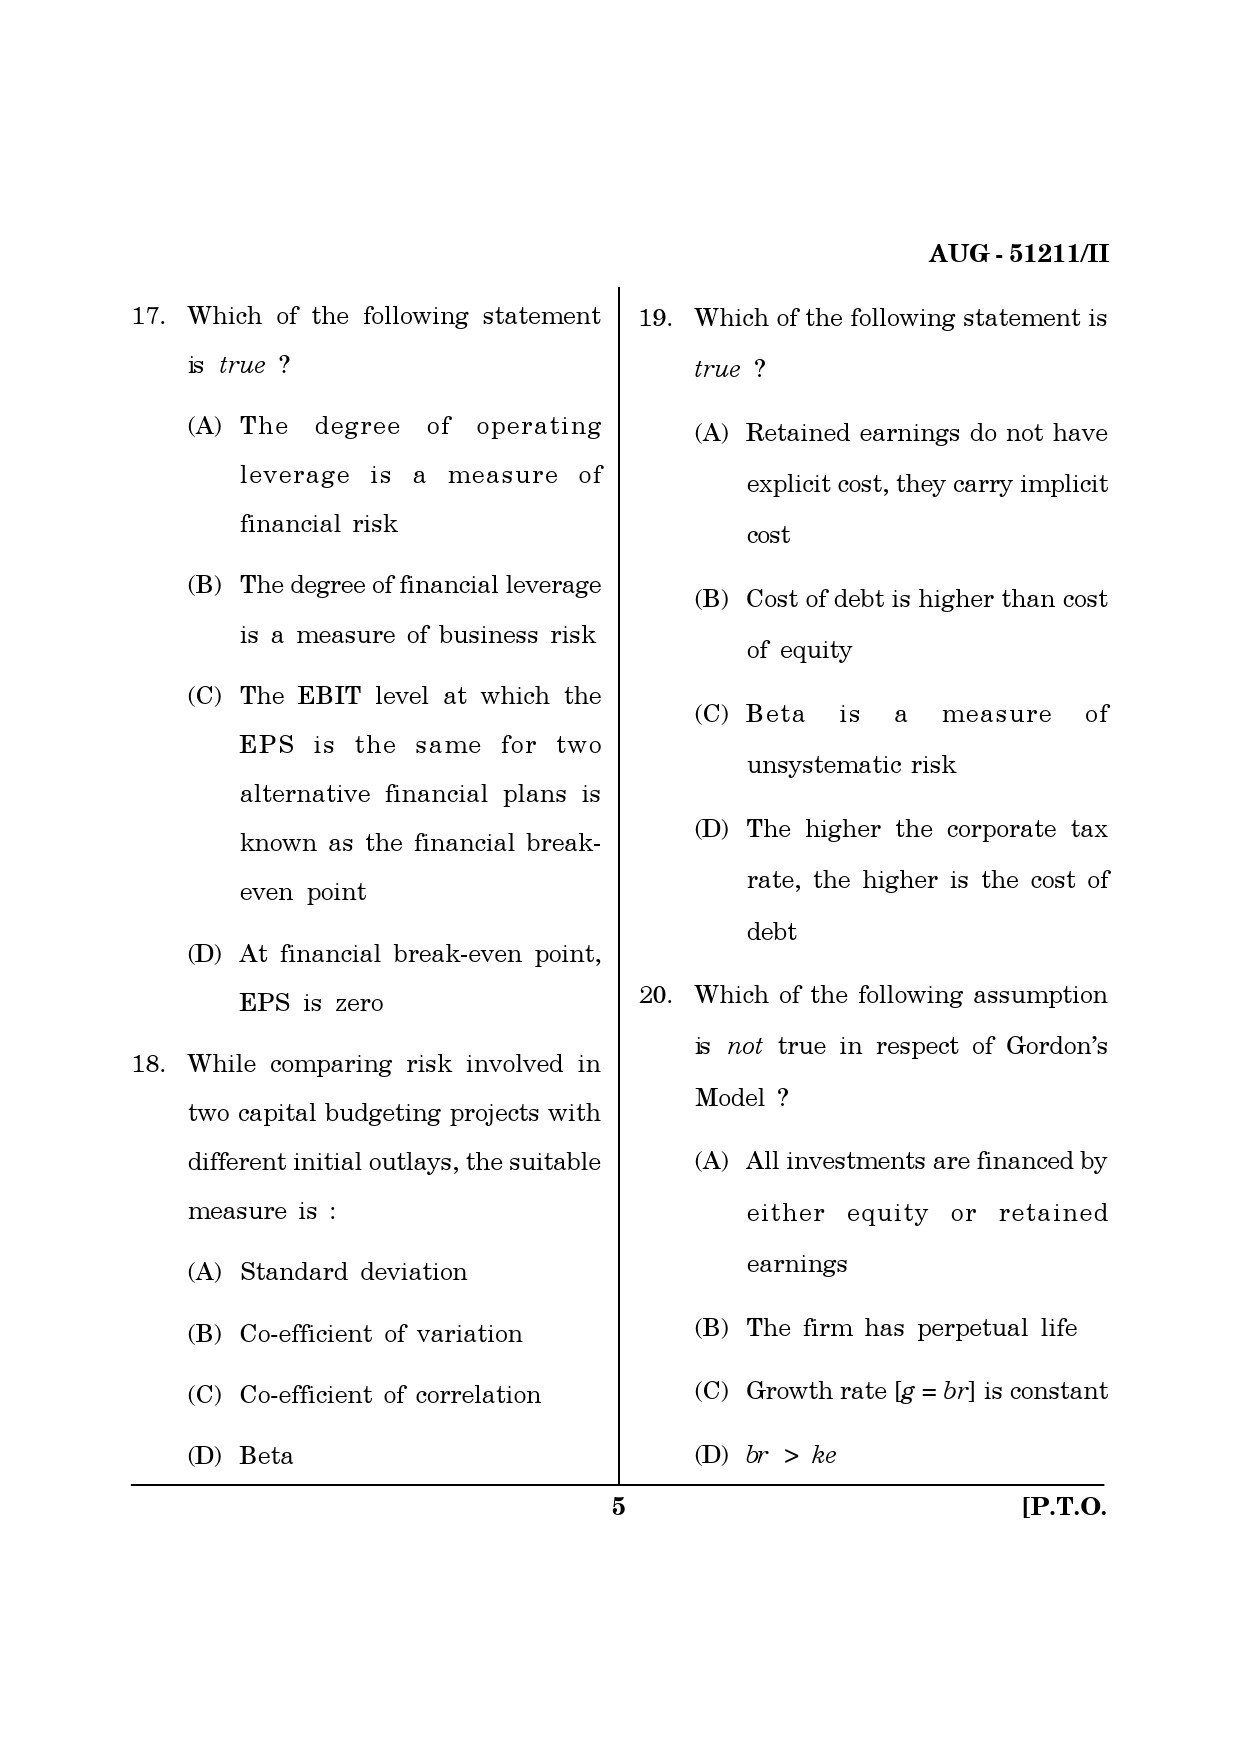 Maharashtra SET Management Question Paper II August 2011 5